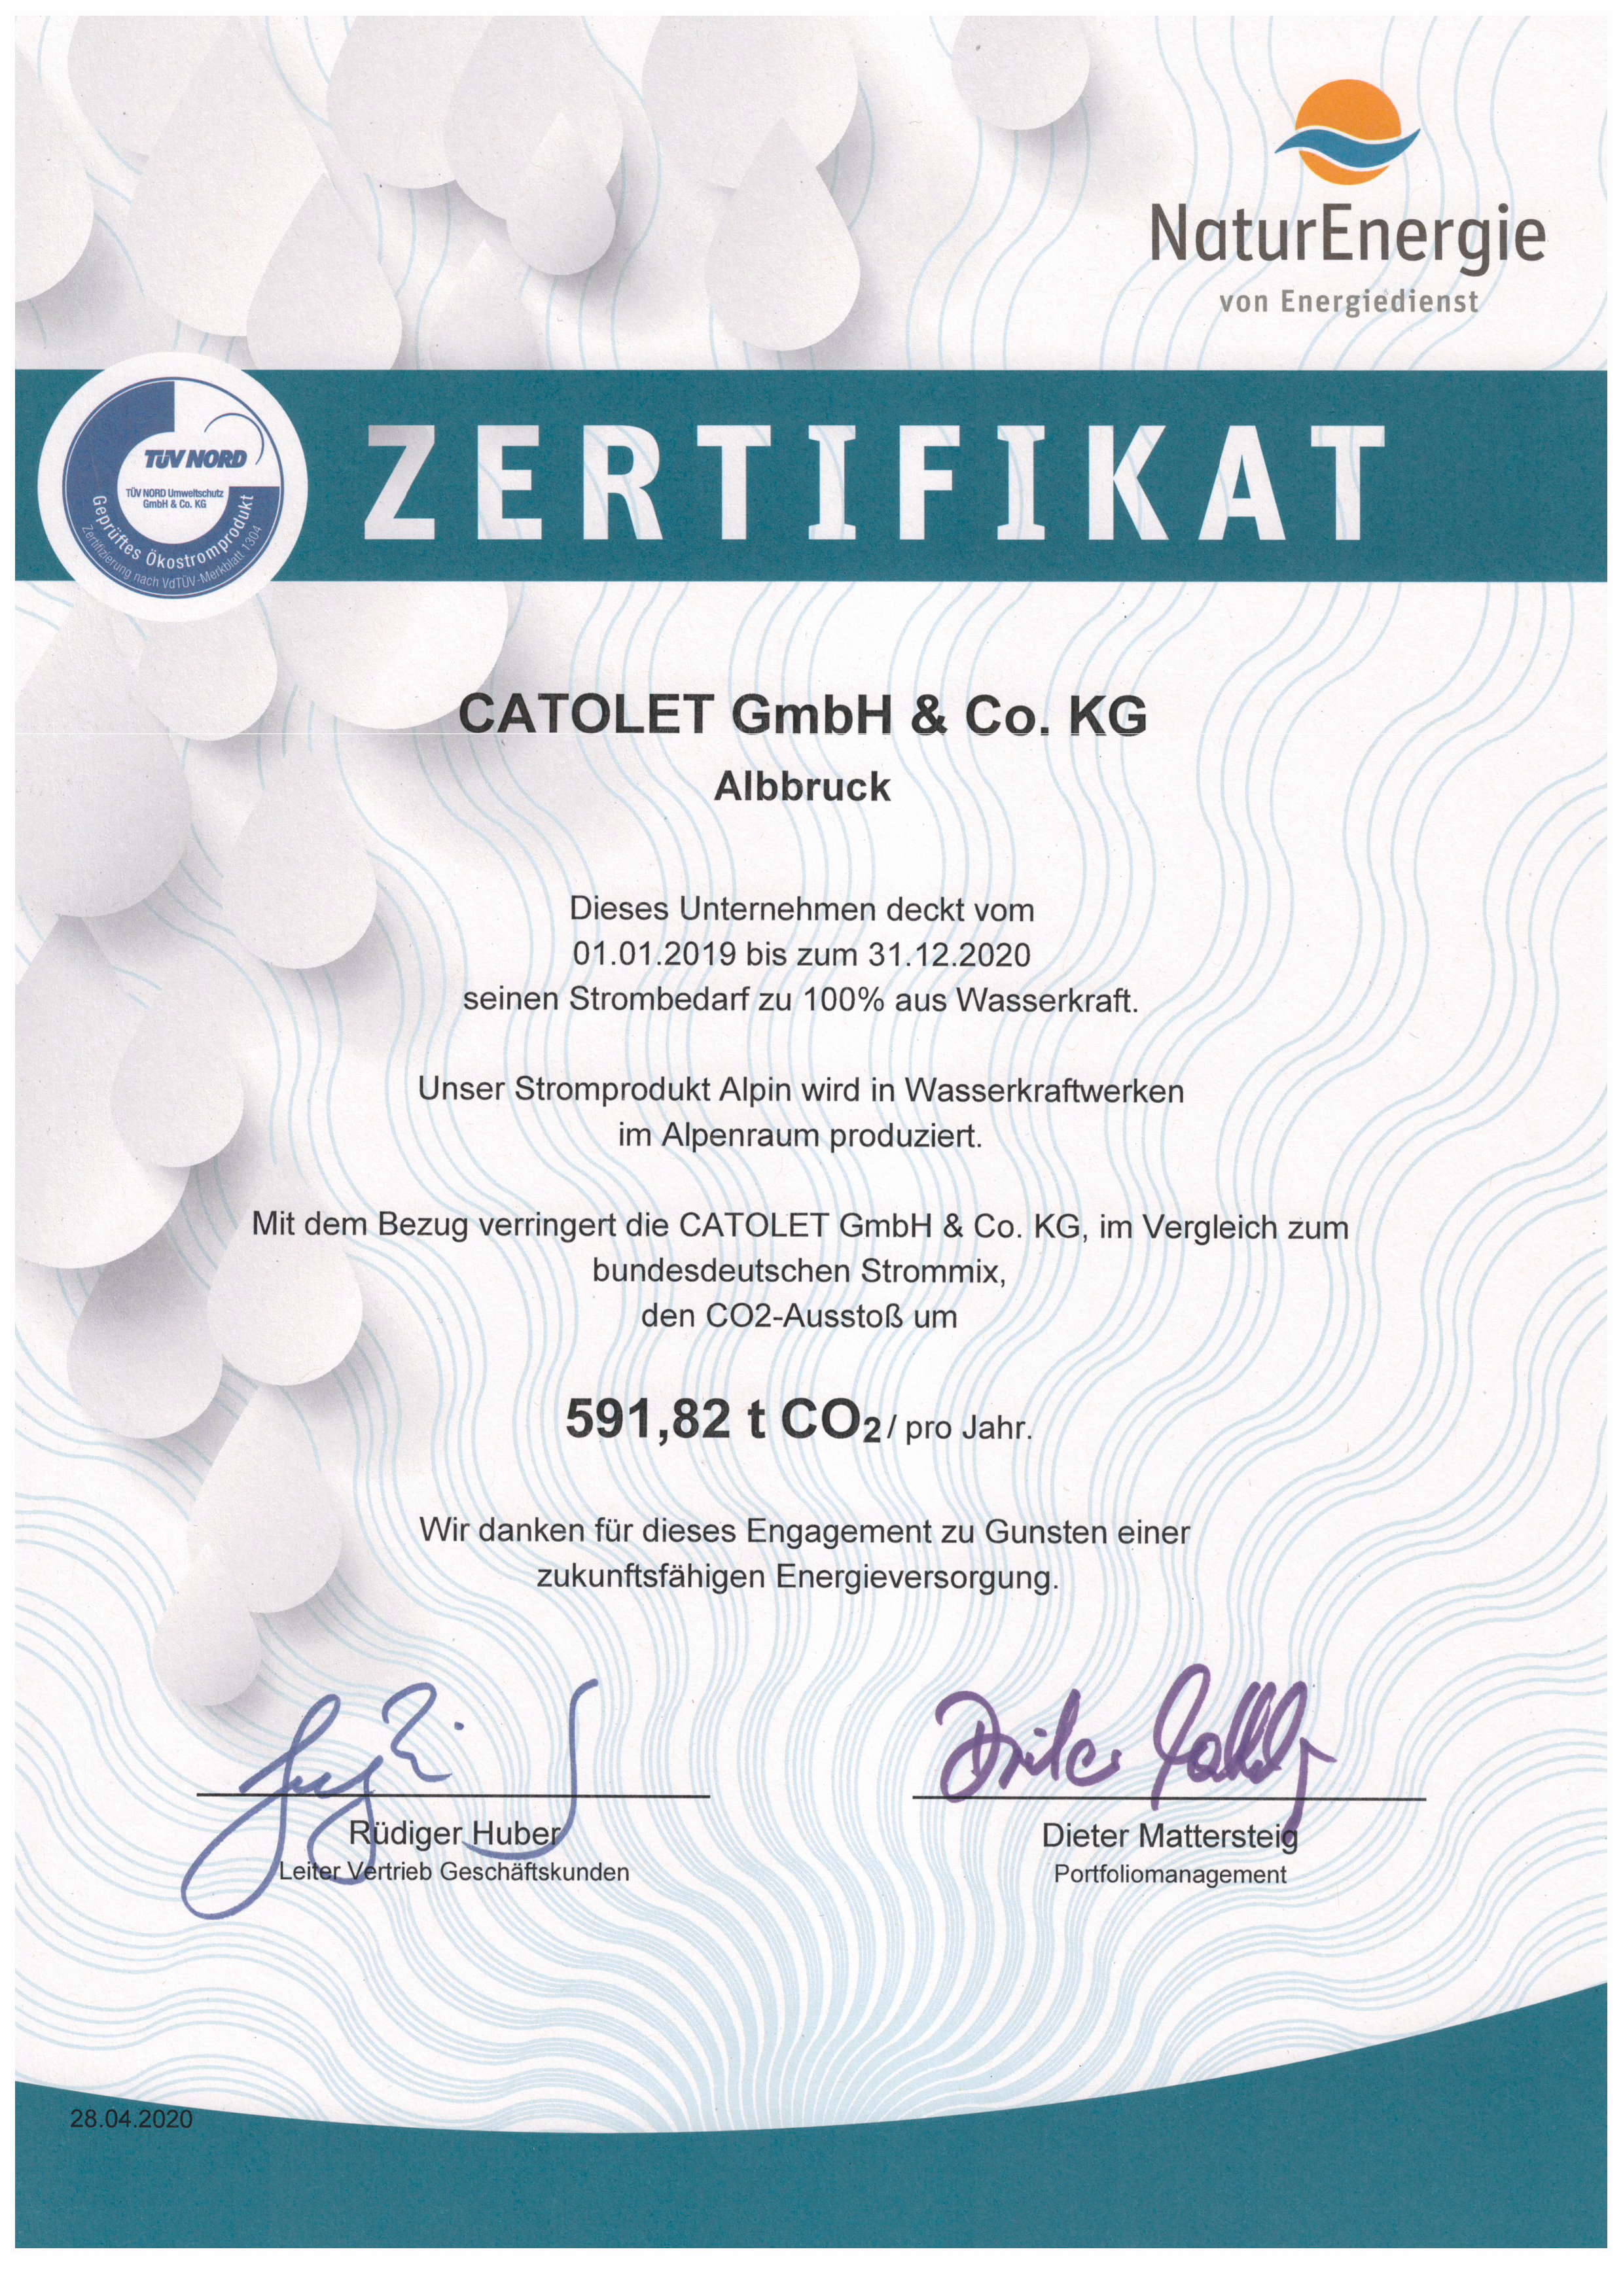 CATOLET GmbH & Co. KG